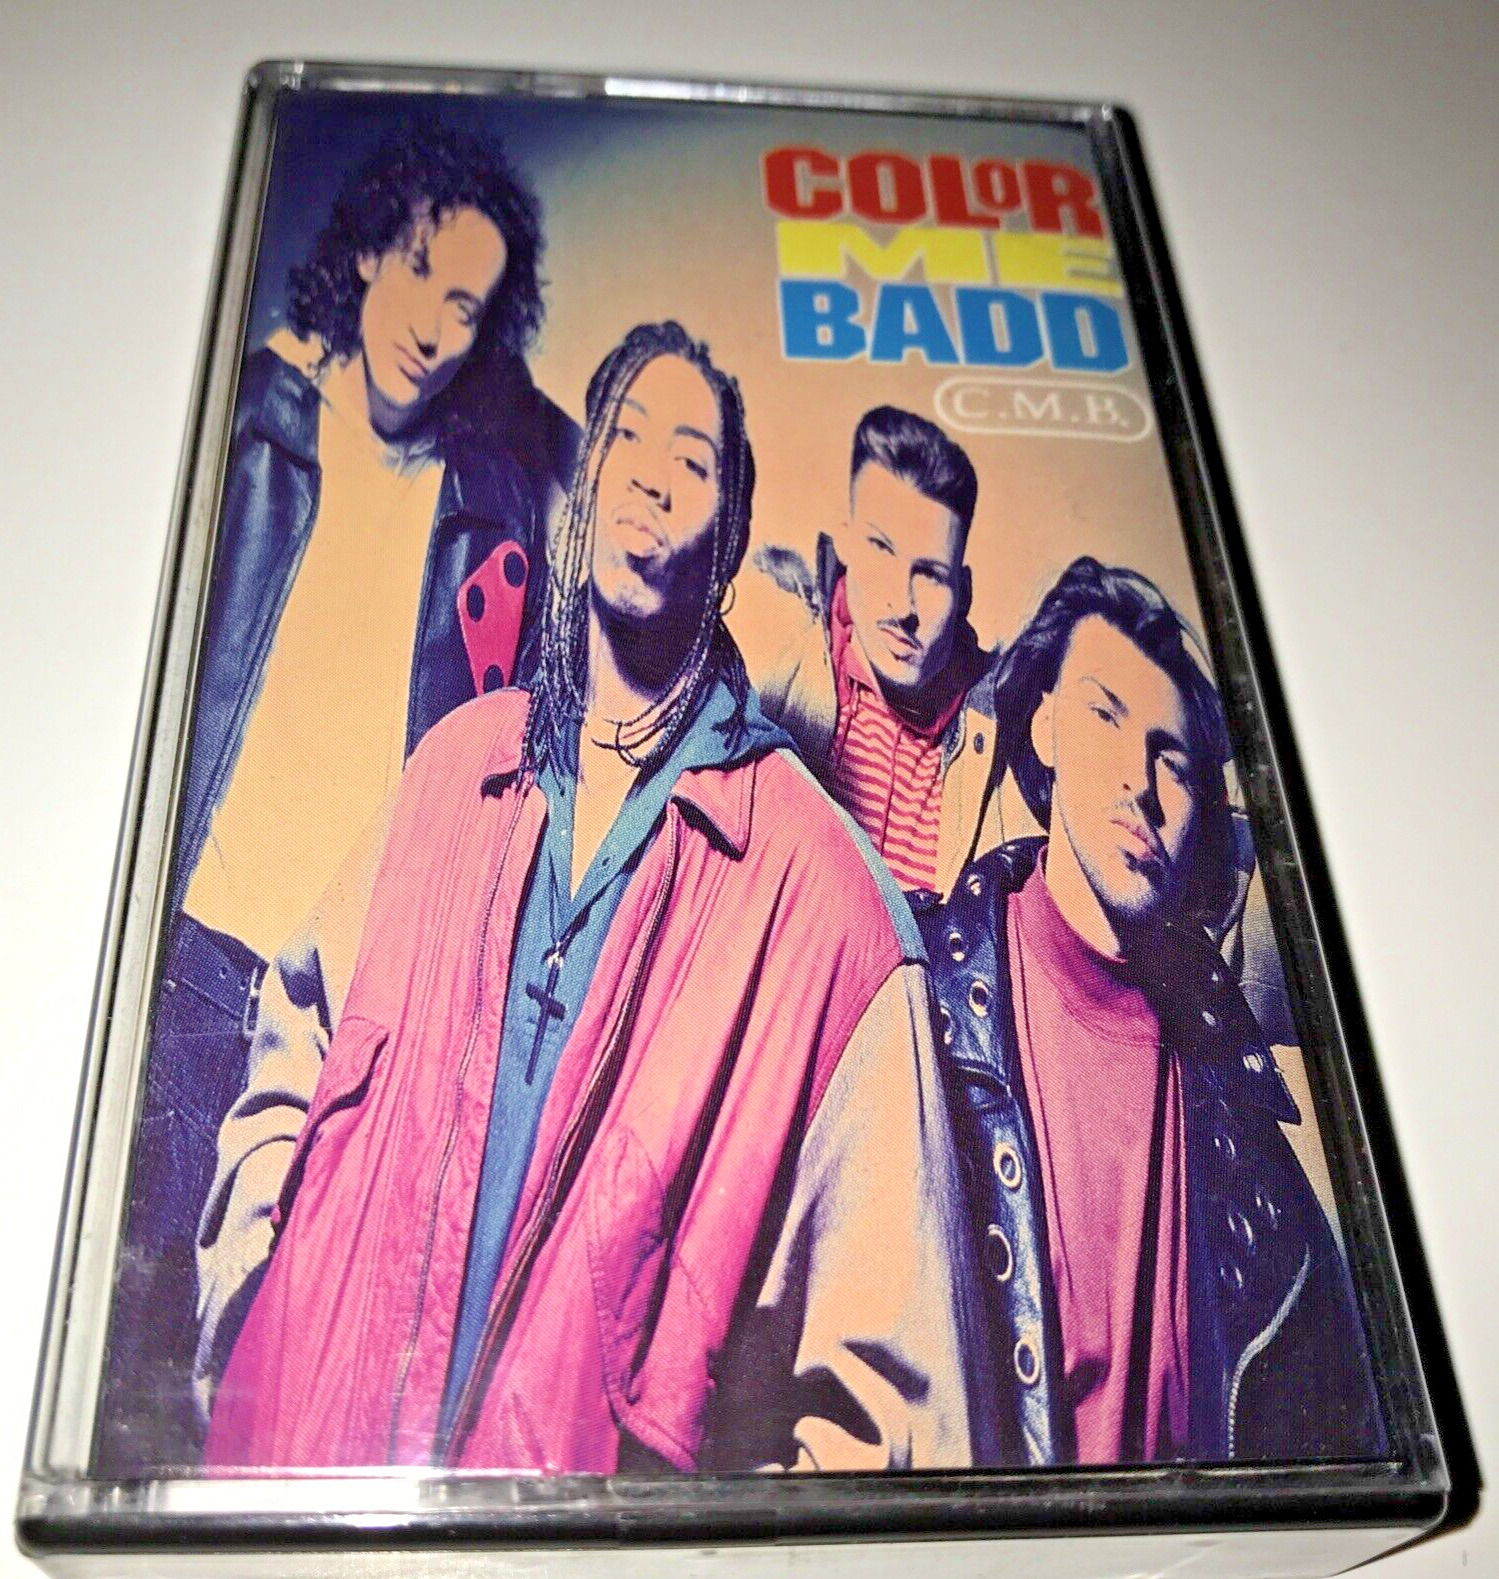 VTG 1990's R&B/Soul/Pop Music Cassette -Color Me Badd C.M.B. -self-titled album